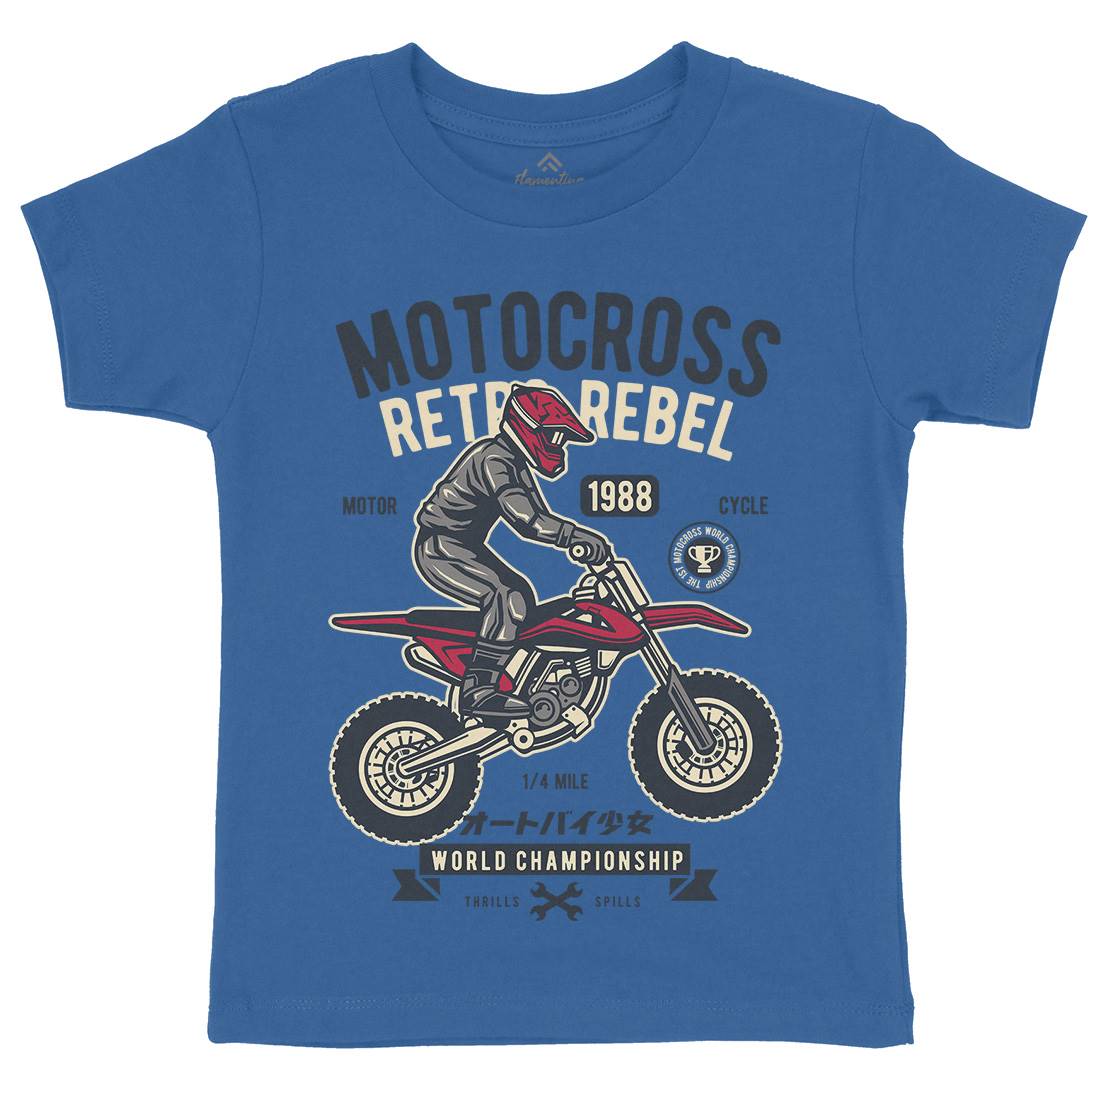 Motocross Retro Rebel Kids Crew Neck T-Shirt Motorcycles D553